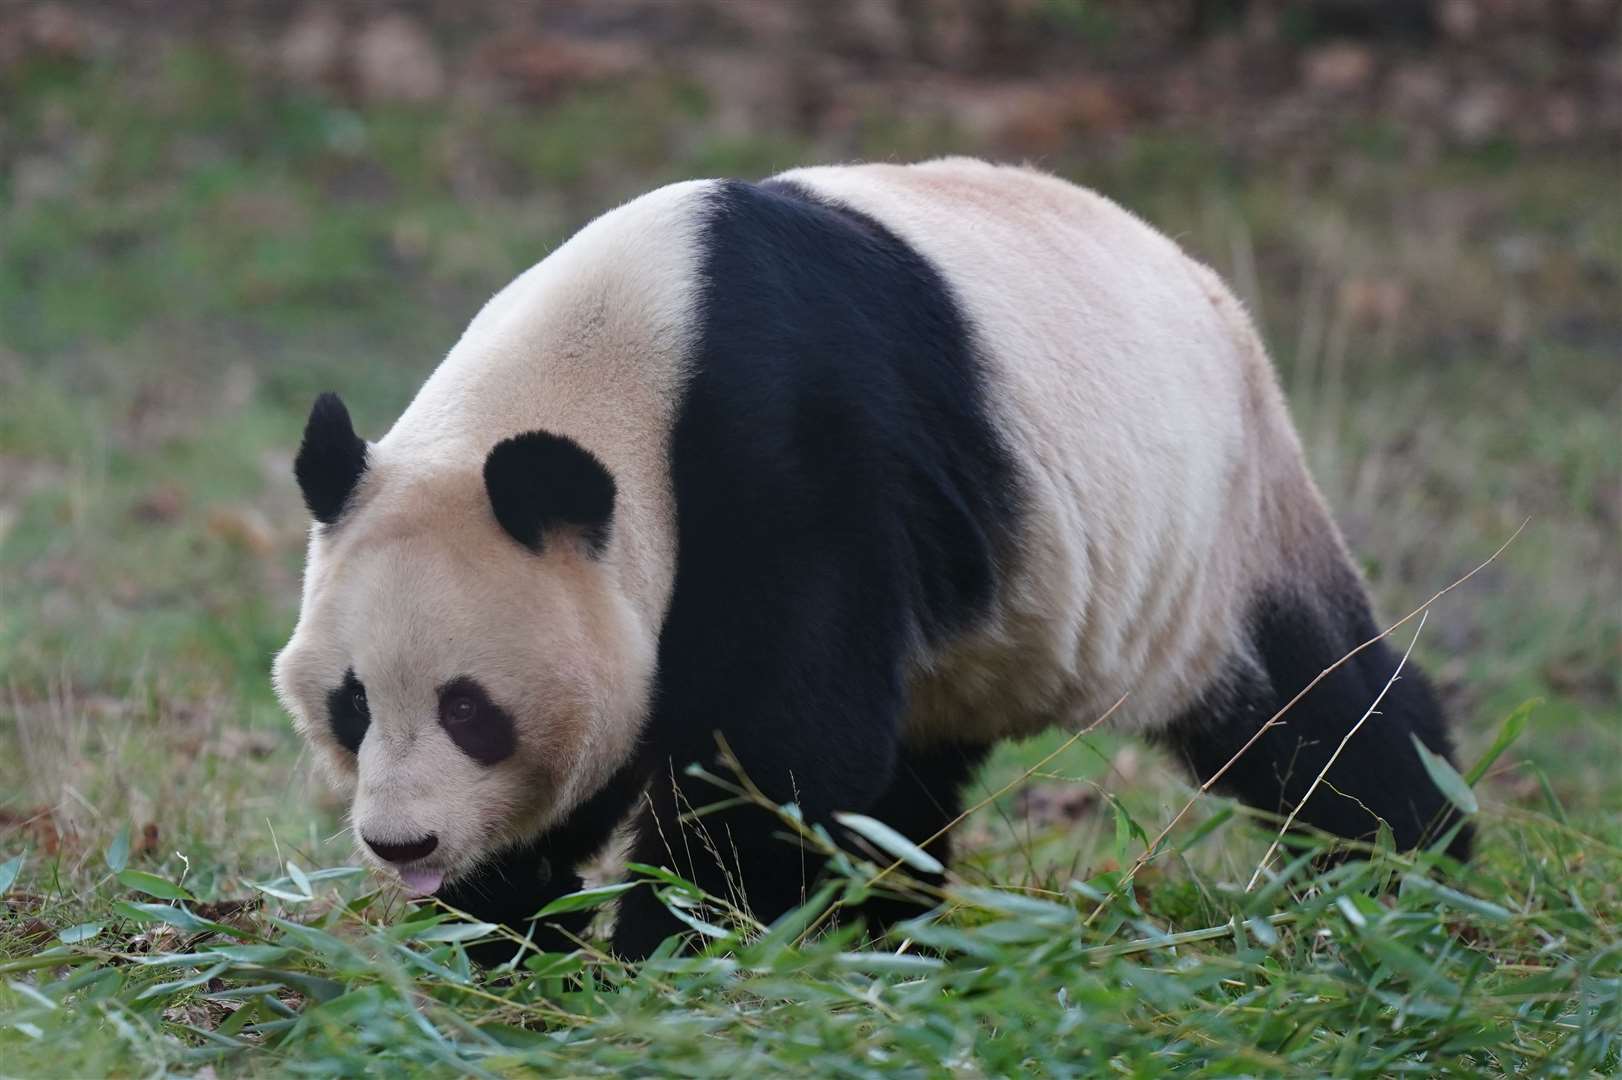 Giant panda Yang Guang took a stroll around his enclosure while visitors looked on (Jane Barlow/PA)